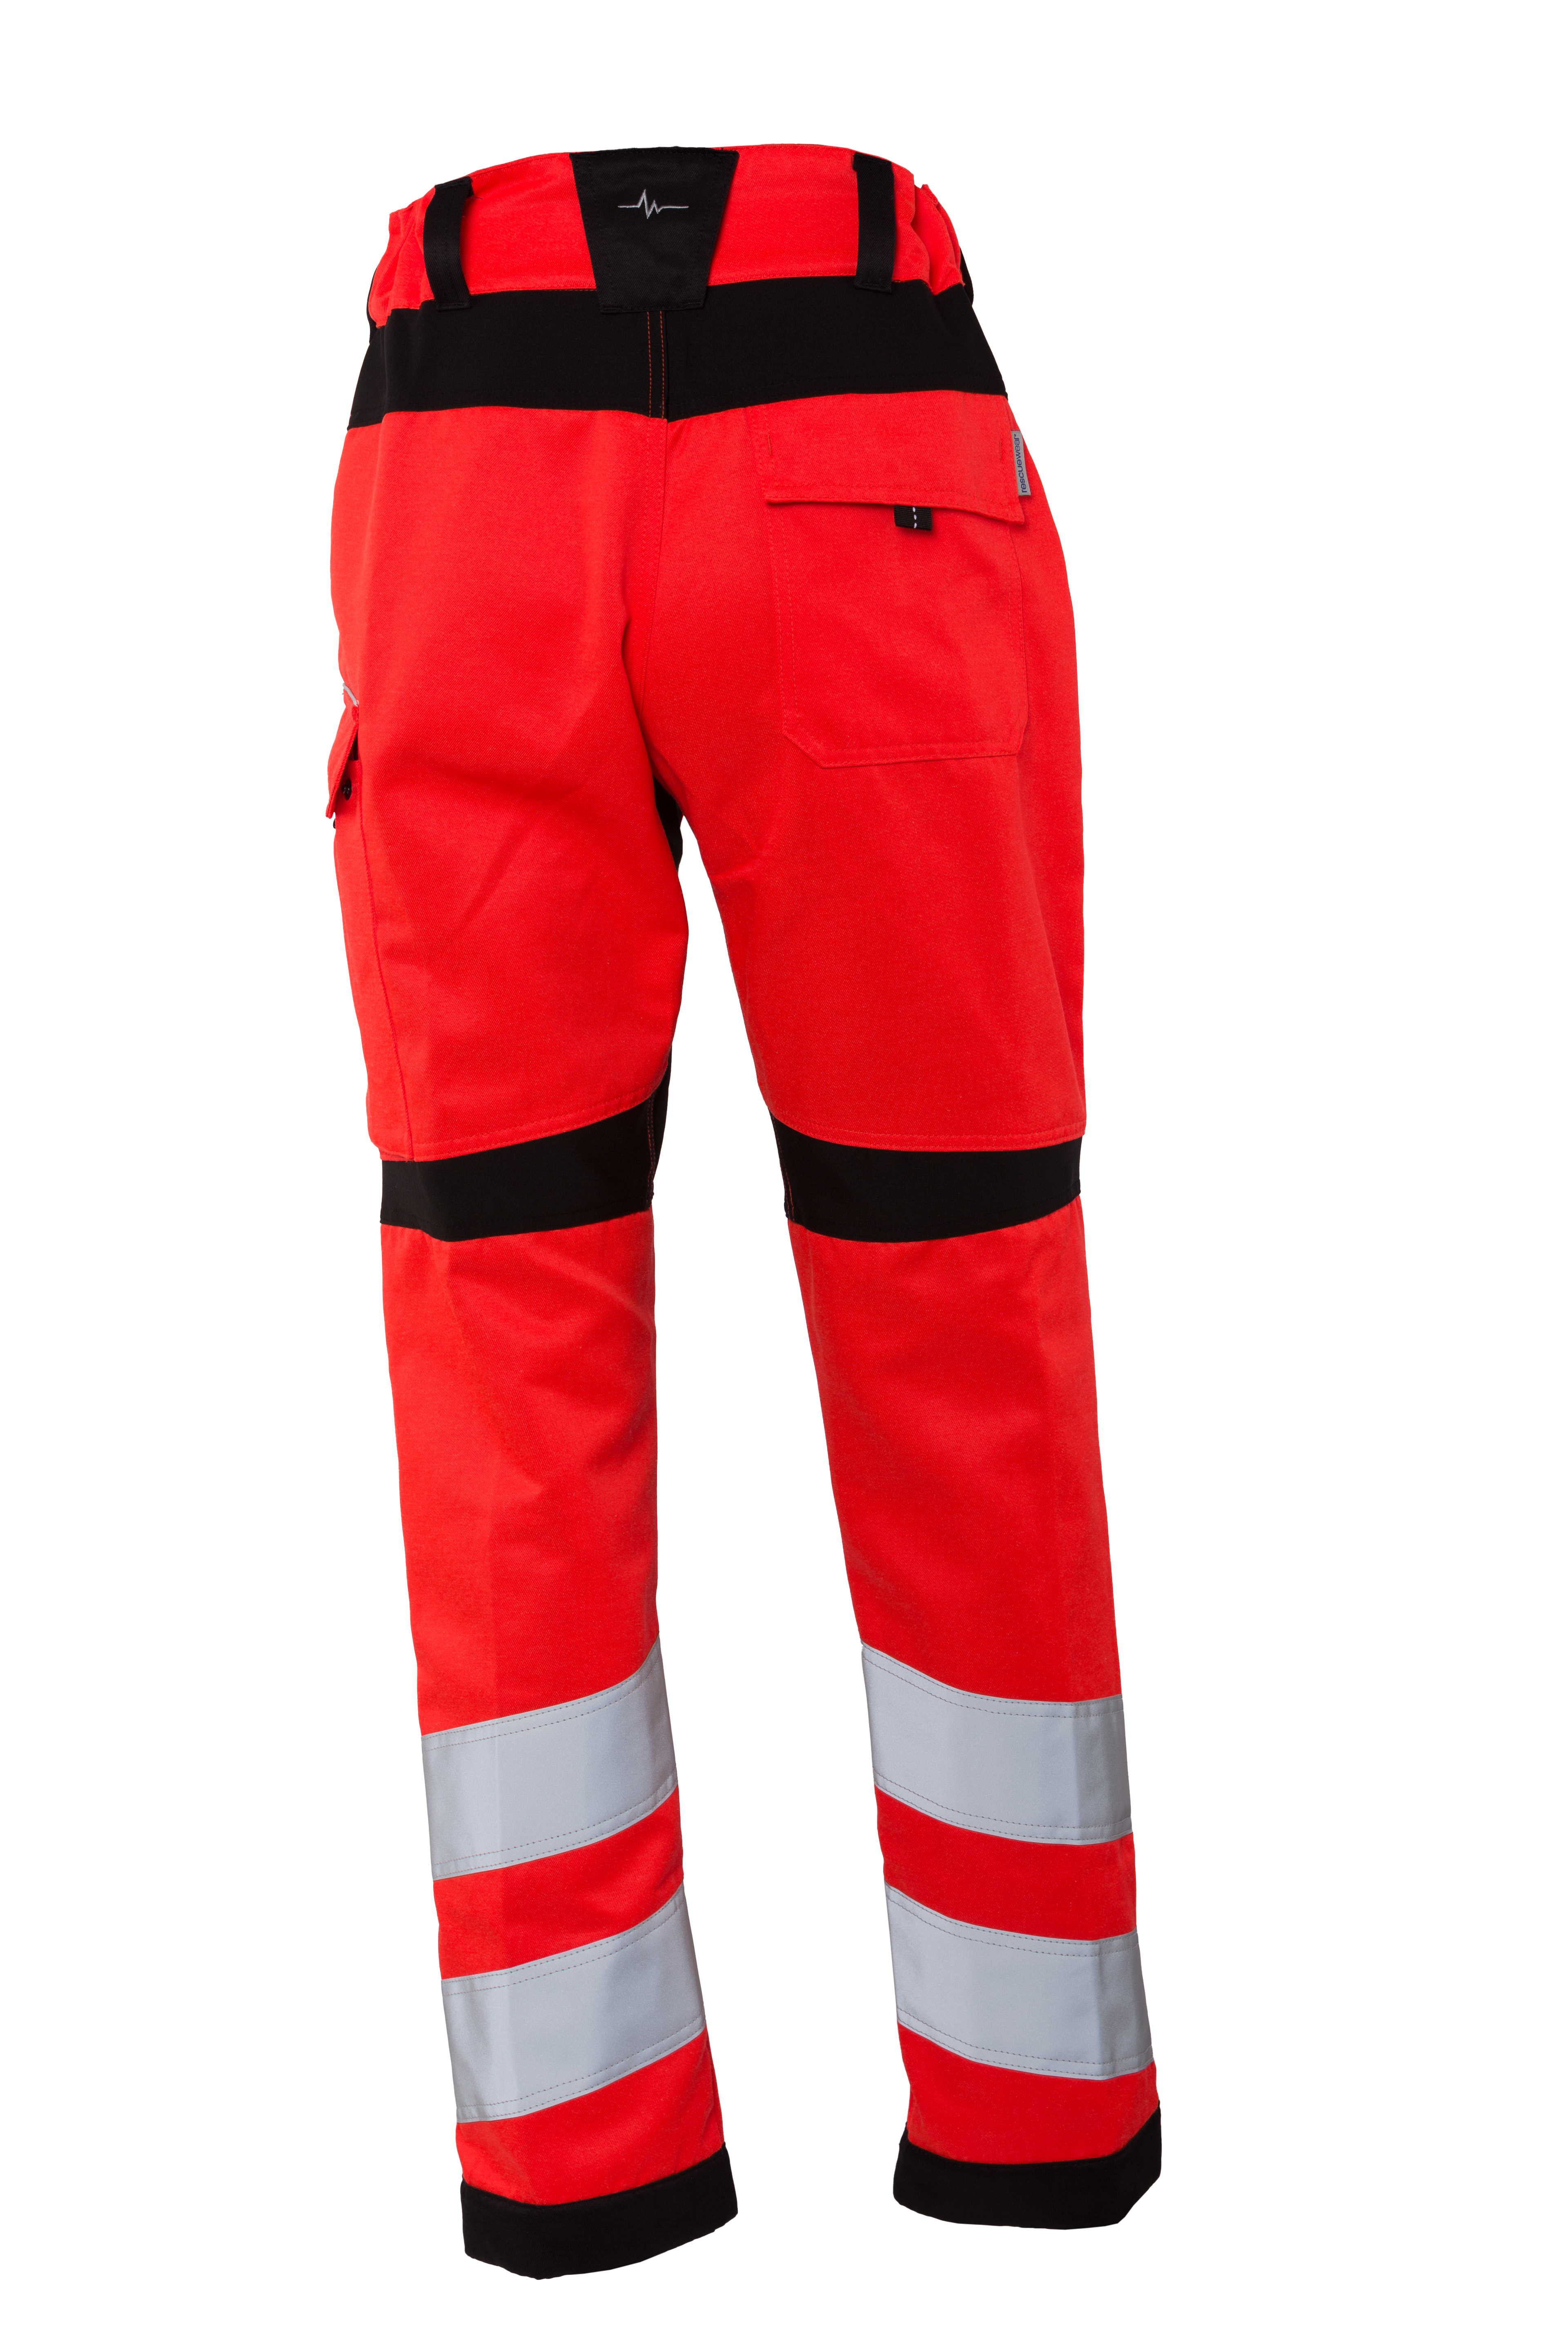 Rescuewear Damen Hose 33413SCORDLAD Stretch HiVis Klasse 2 Neon Rot / Schwarz